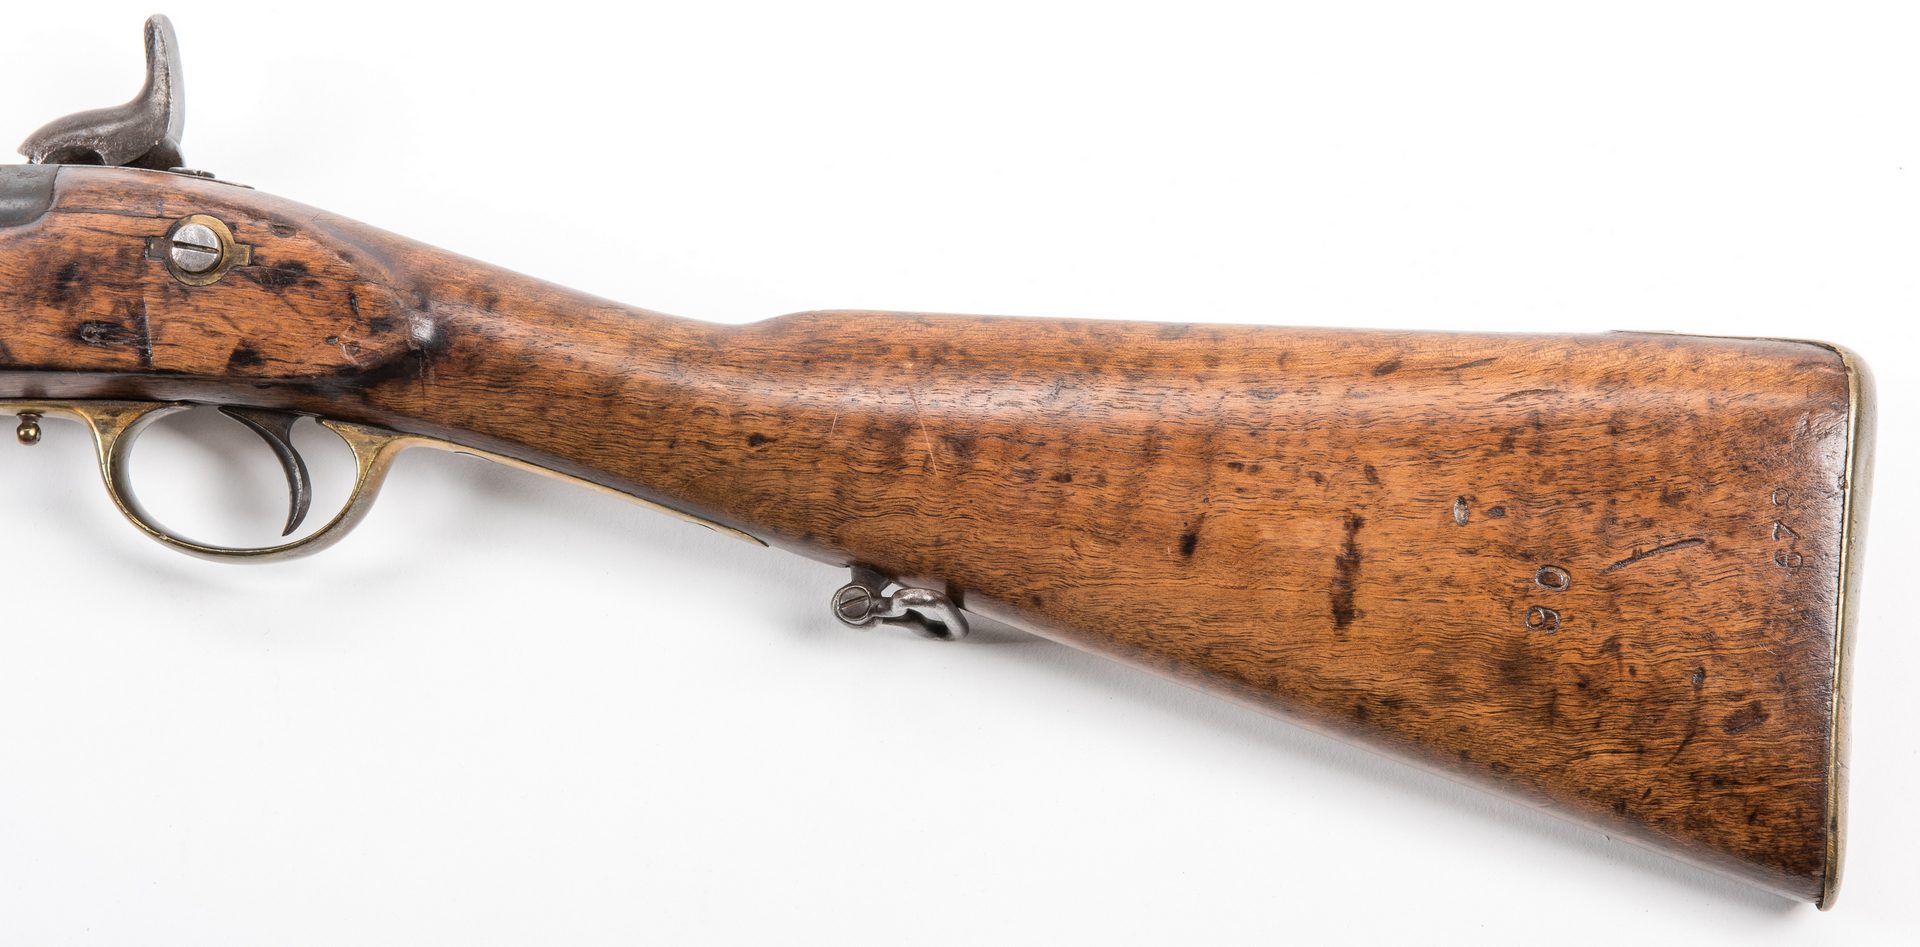 Lot 522: Civil War 1853 Pattern Rifled Enfield Tower Rifle